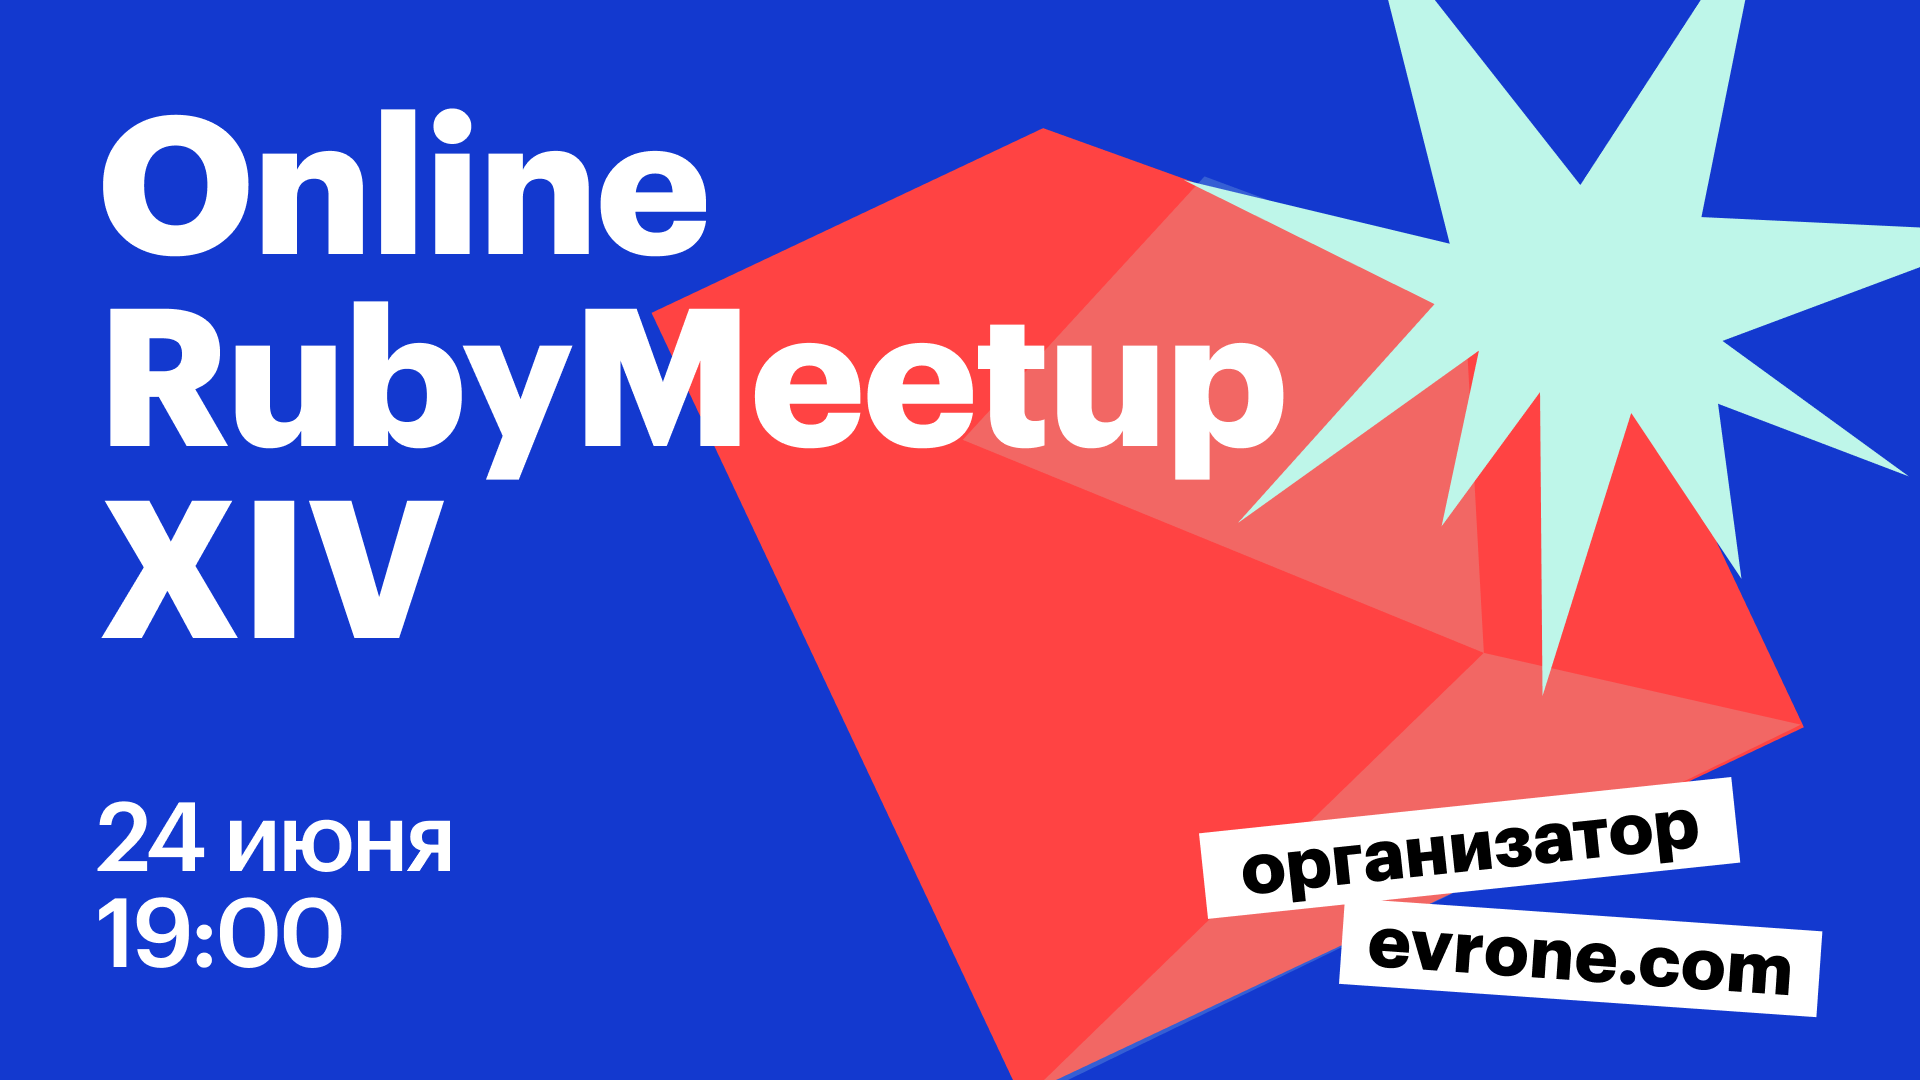 Online Ruby meetup №14